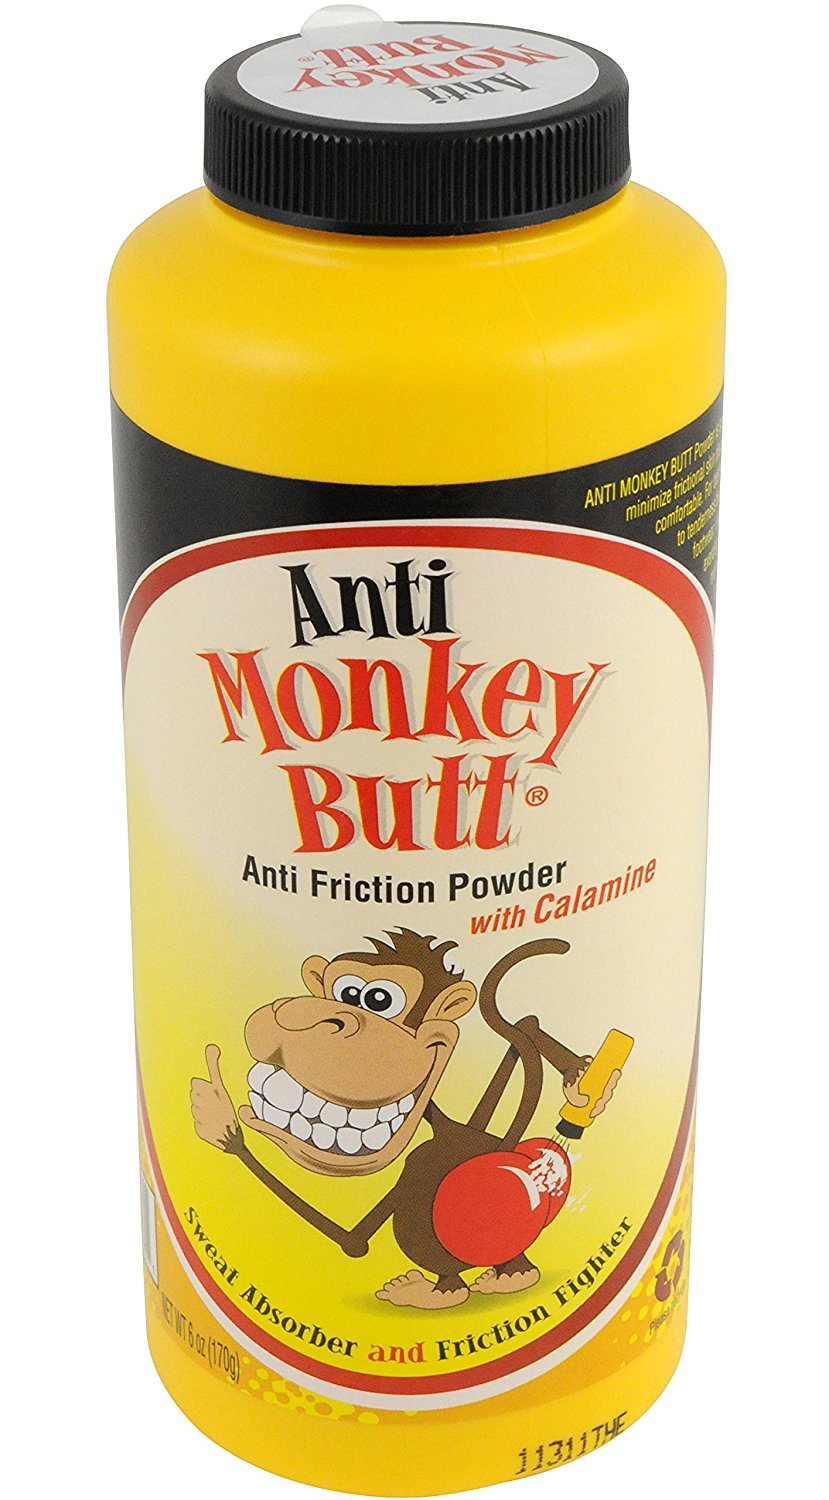 anti-monkey butt powder